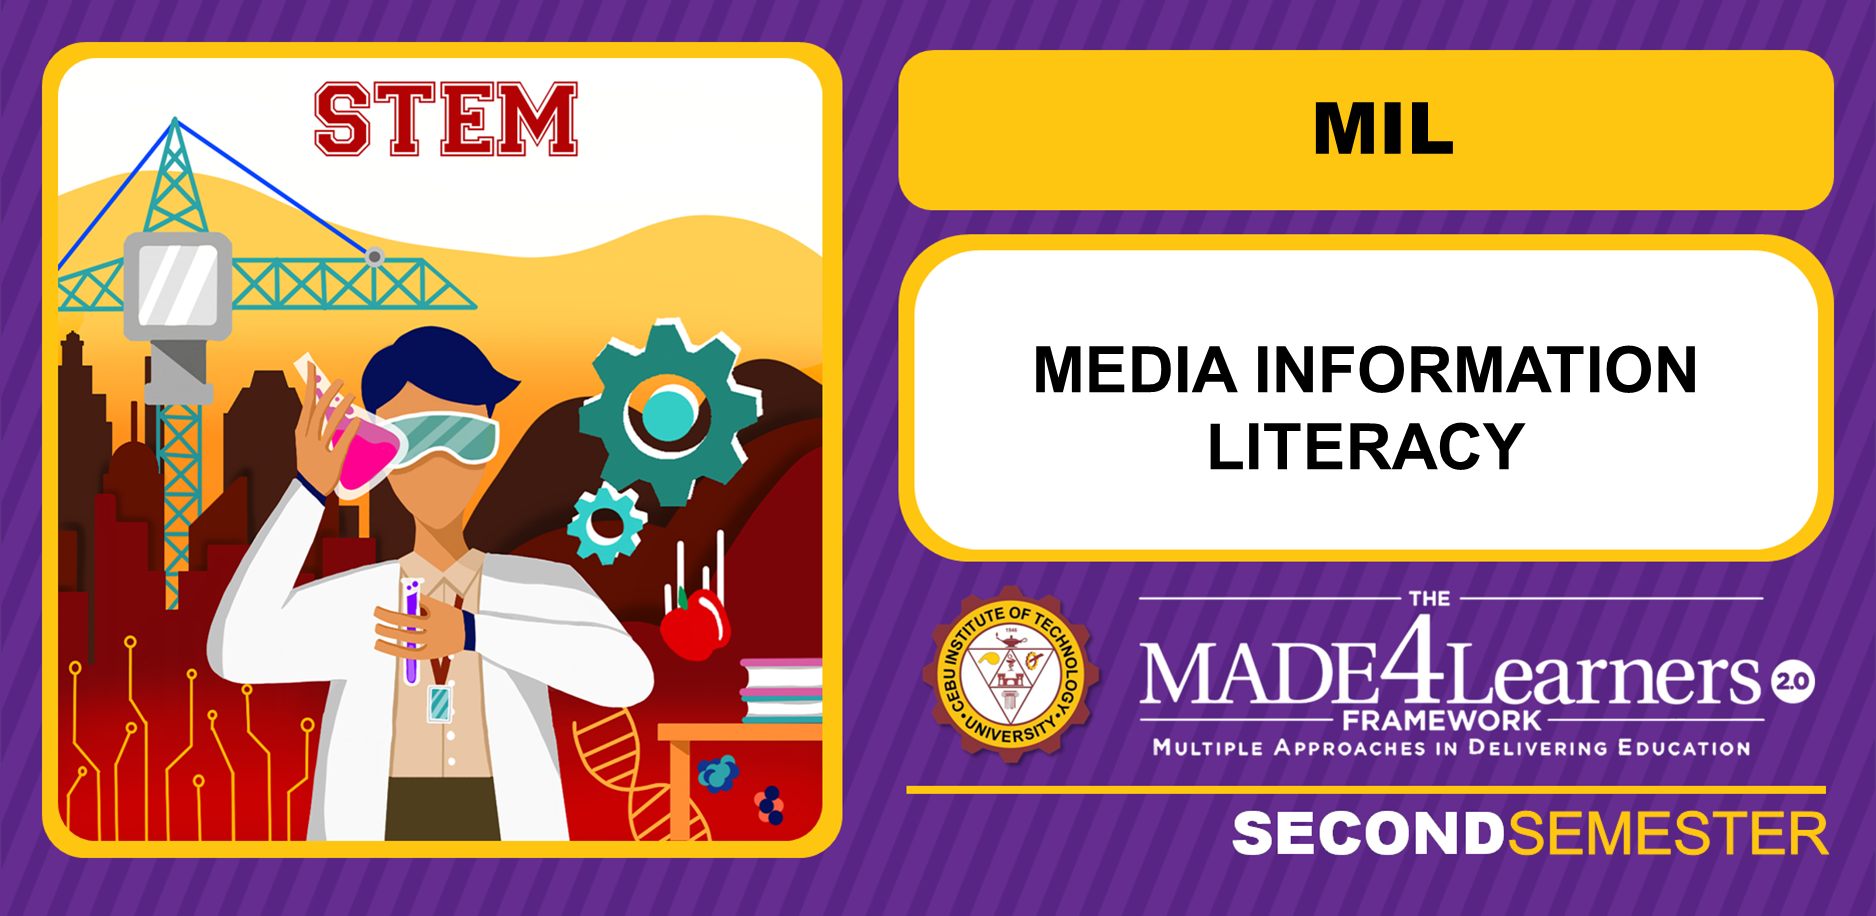 MIL: Media Information Literacy (Campaña)